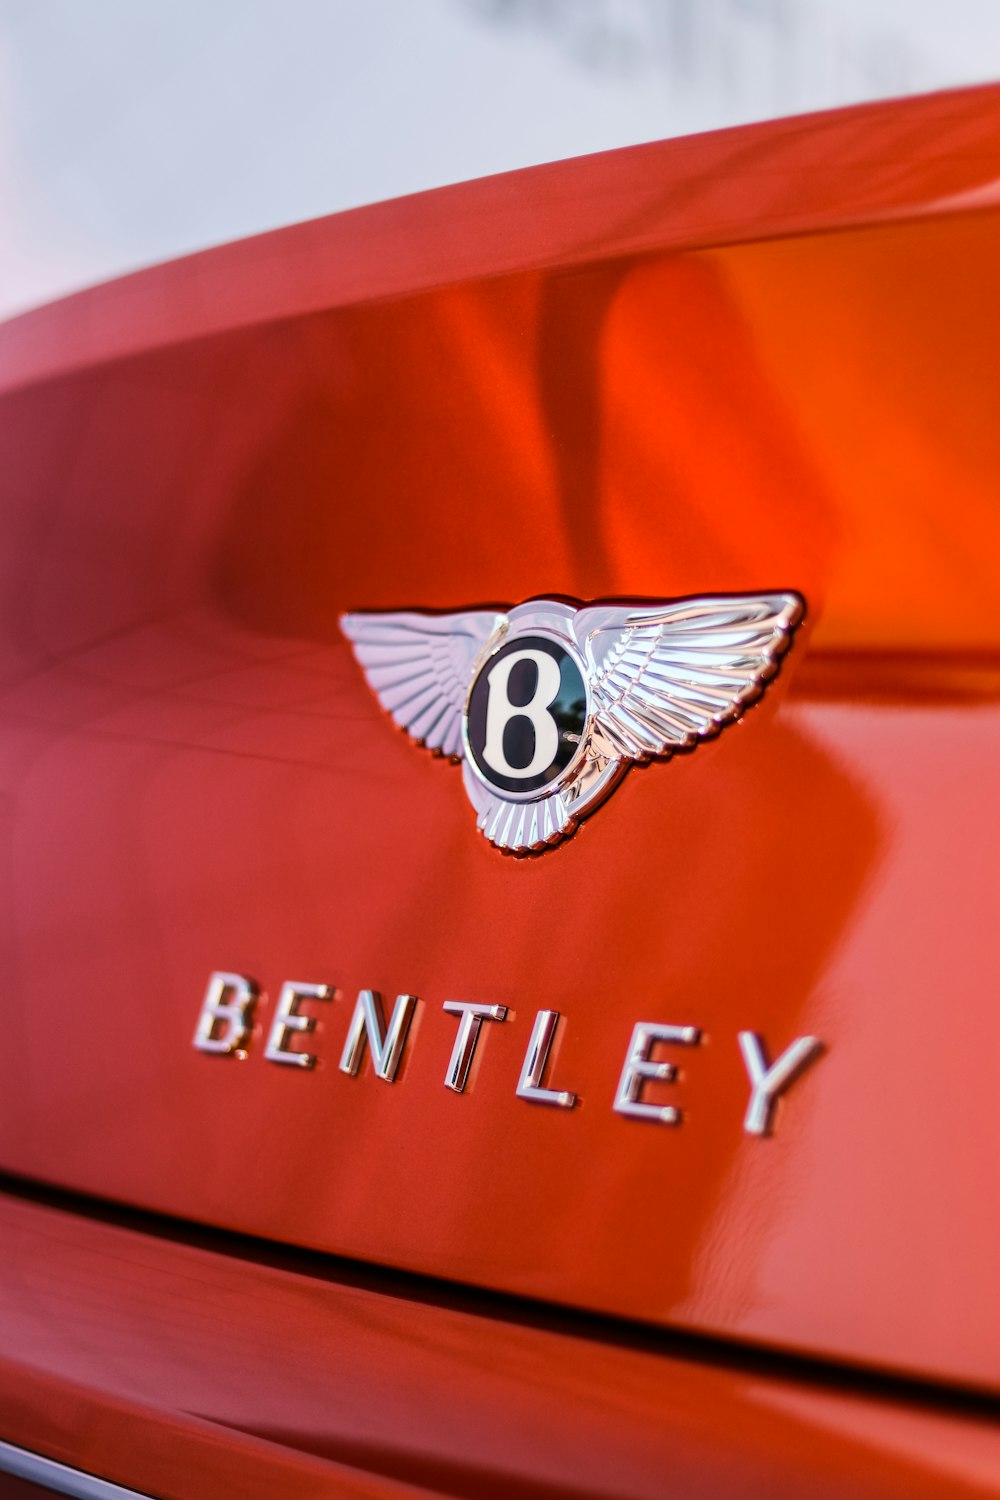 Bentley Logo Pictures | Download Free Images on Unsplash